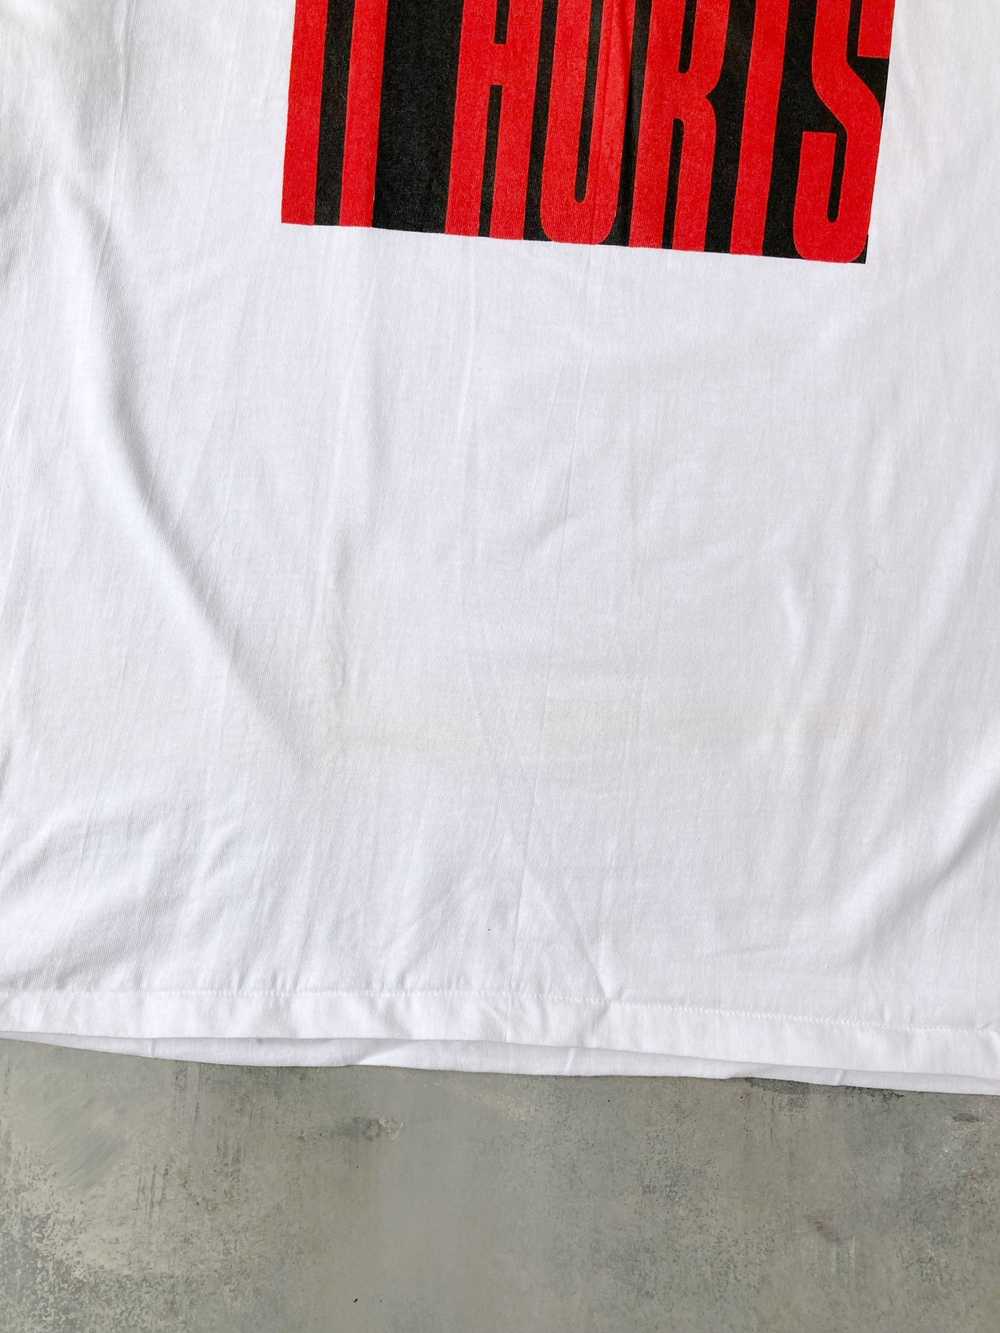 HBO Boxing T-Shirt 90's - XL - image 4